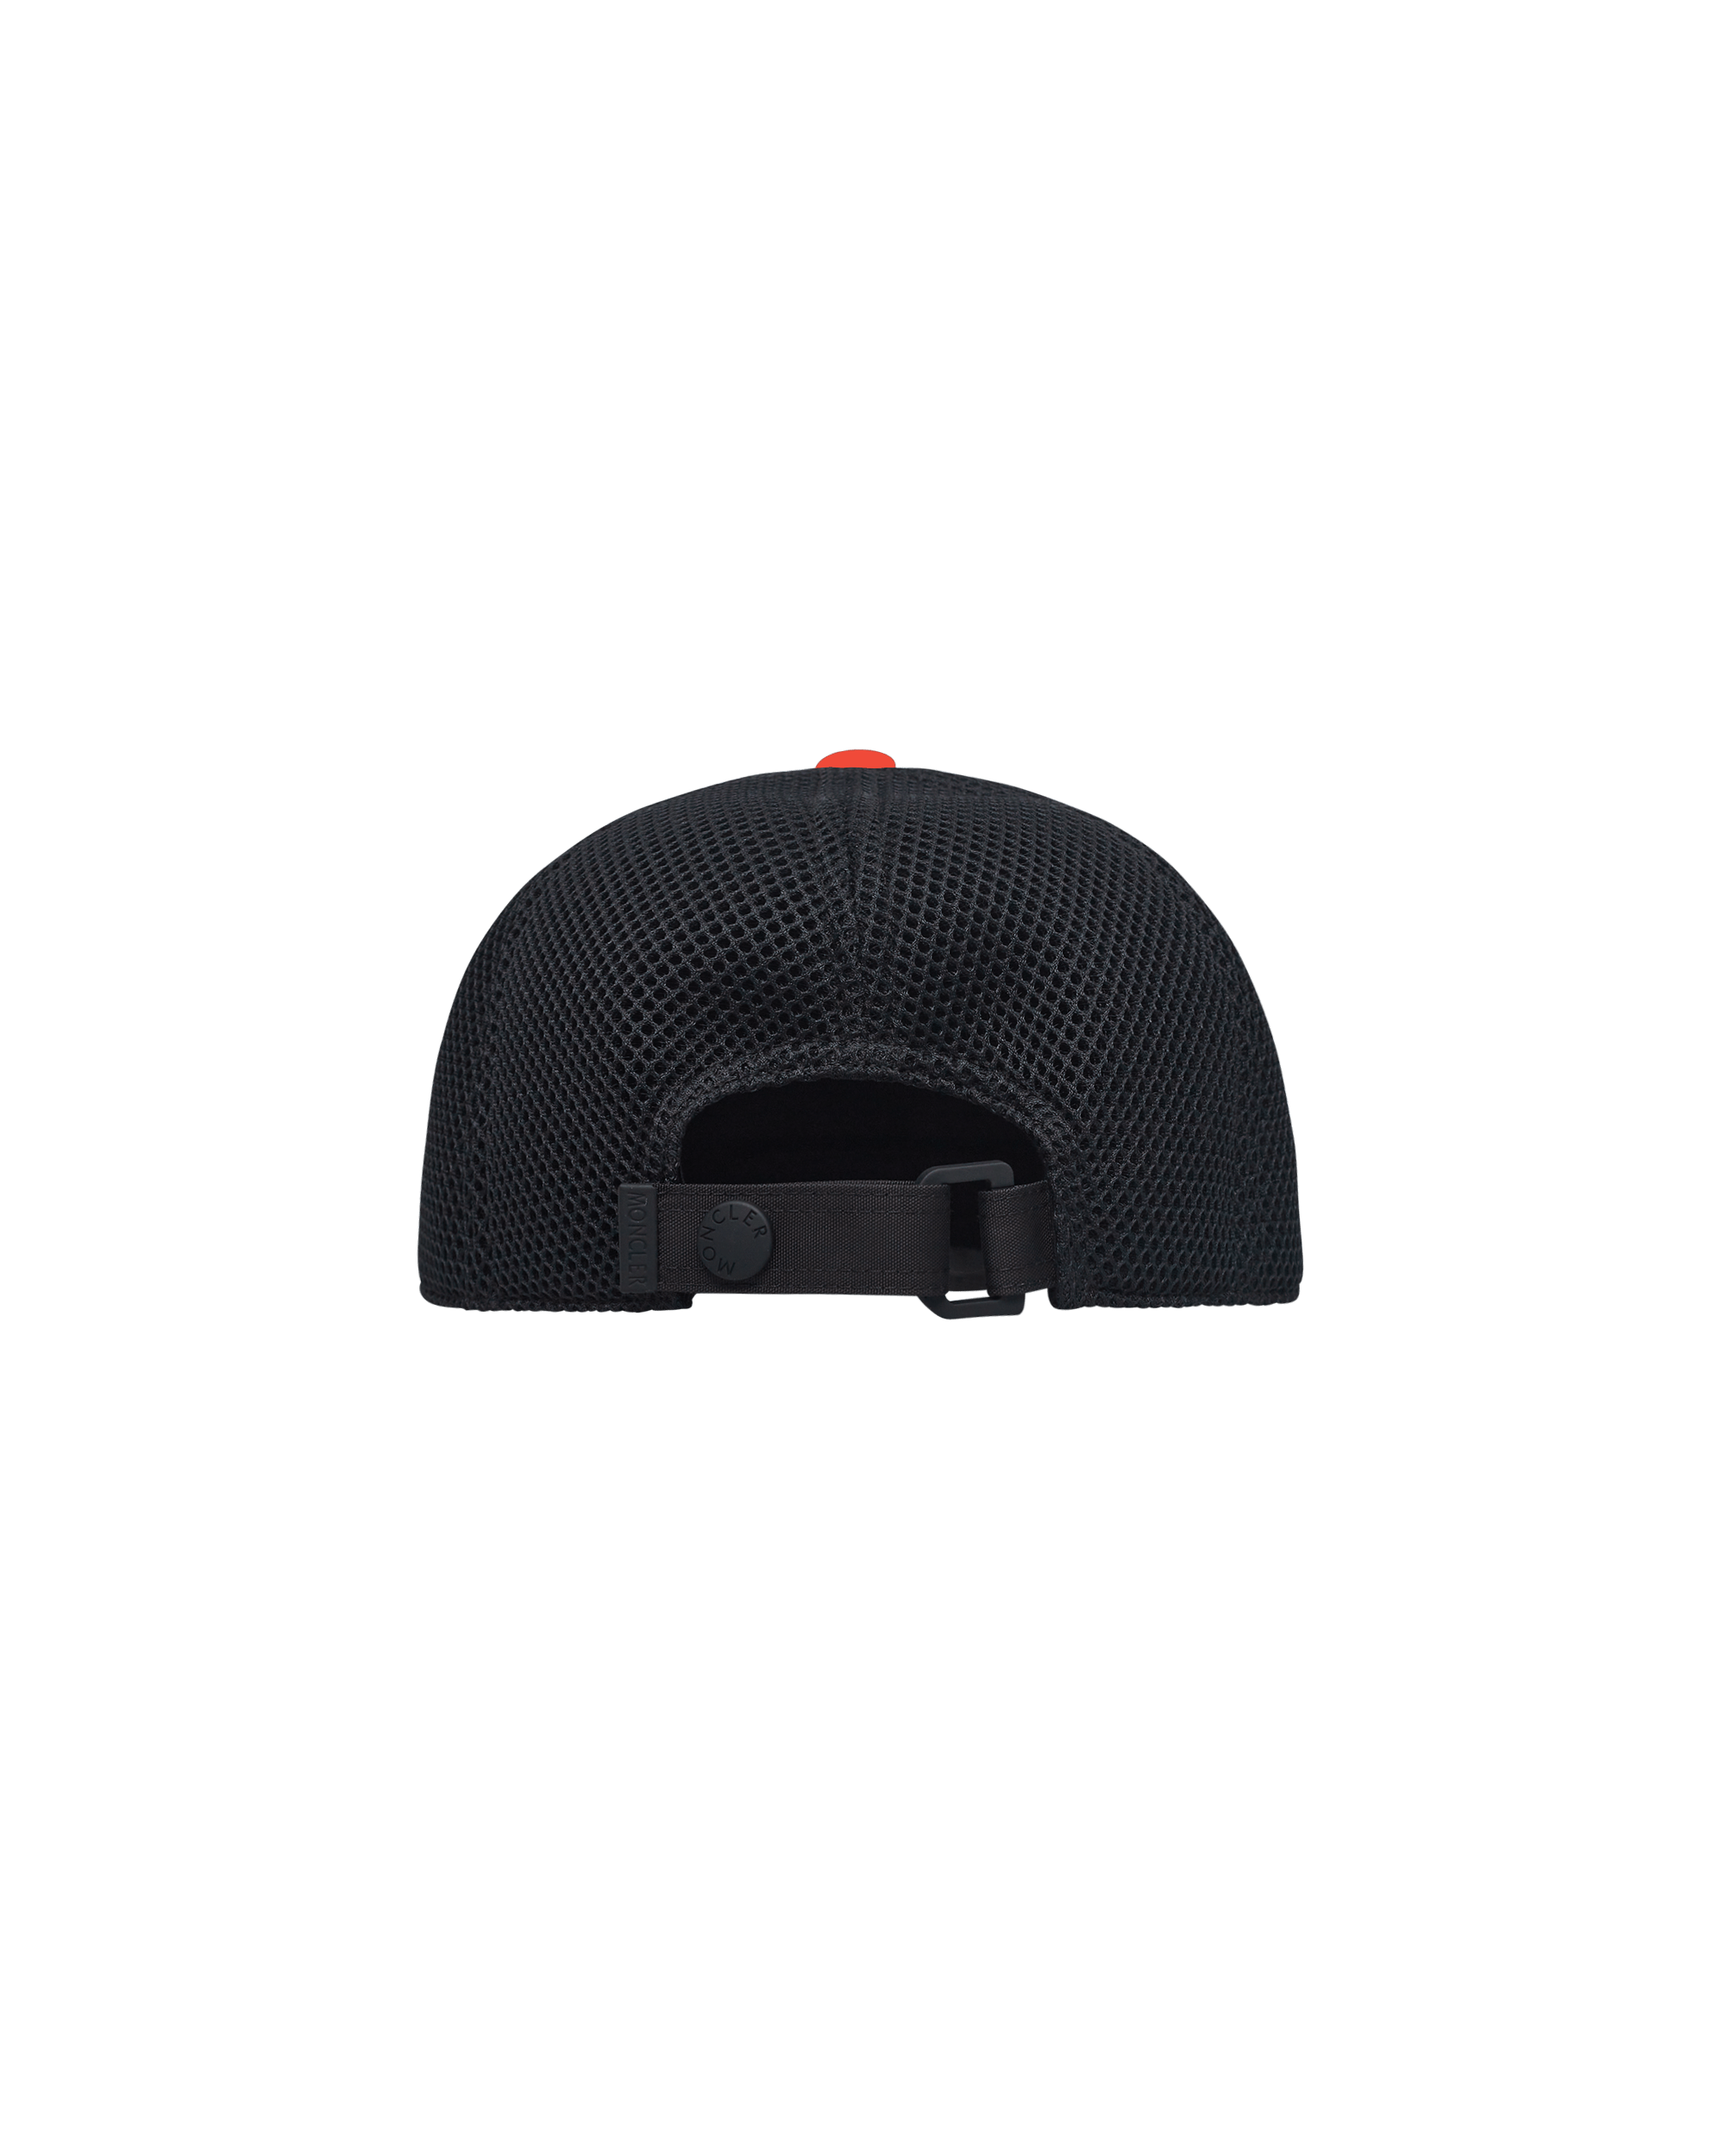 Moncler Genius Grenoble Day-Namic Man Baseball Cap Bright Orange Hats Caps G209Q3B00002 335